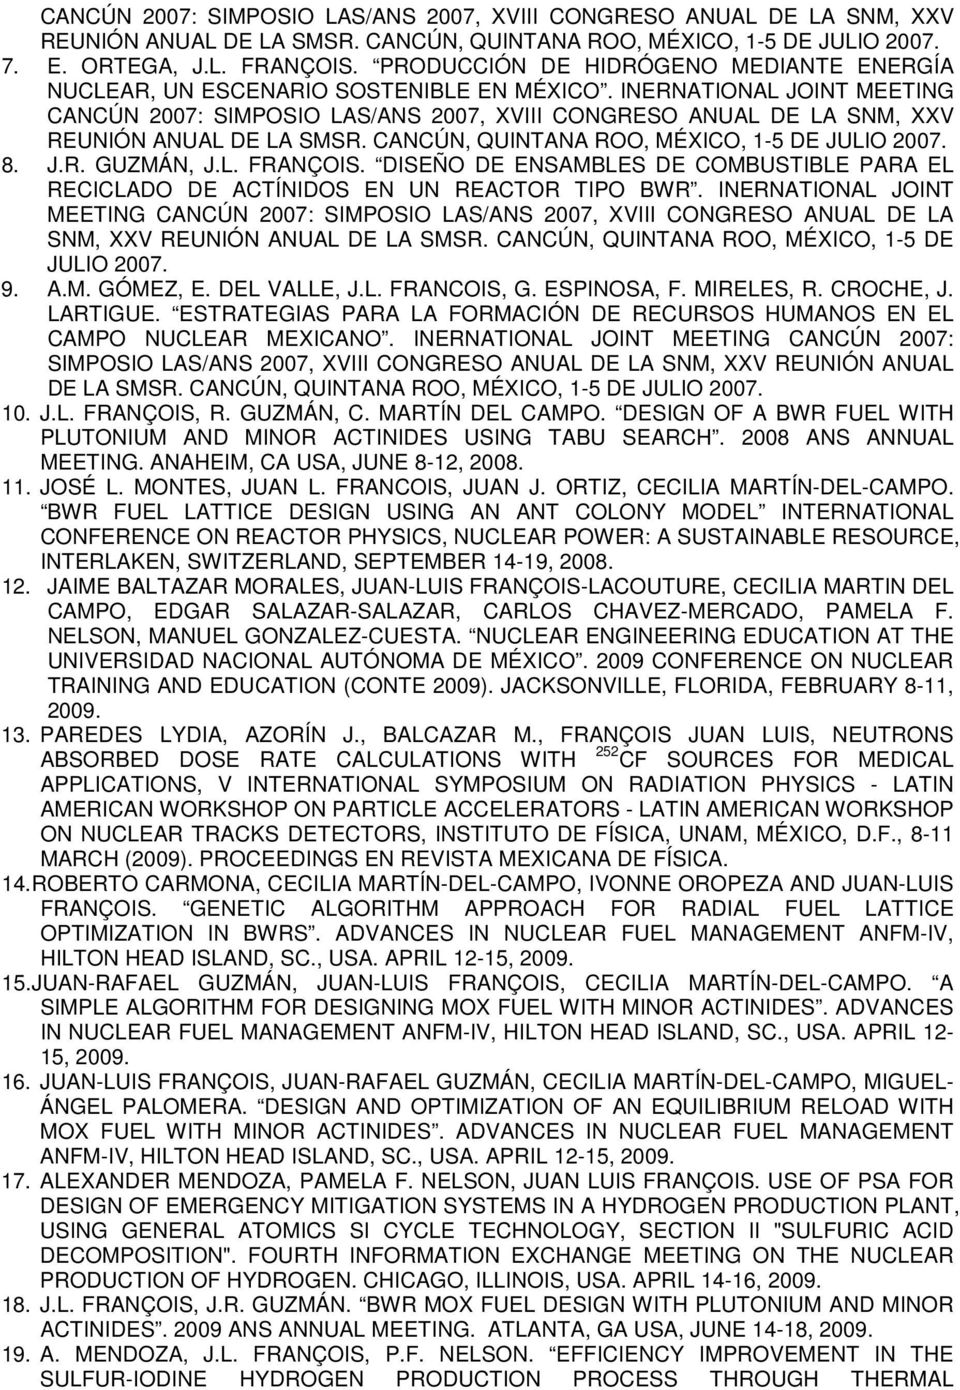 INERNATIONAL JOINT MEETING CANCÚN 2007: SIMPOSIO LAS/ANS 2007, XVIII CONGRESO ANUAL DE LA SNM, XXV REUNIÓN ANUAL DE LA SMSR. CANCÚN, QUINTANA ROO, MÉXICO, 1-5 DE JULIO 2007. 8. J.R. GUZMÁN, J.L. FRANÇOIS.